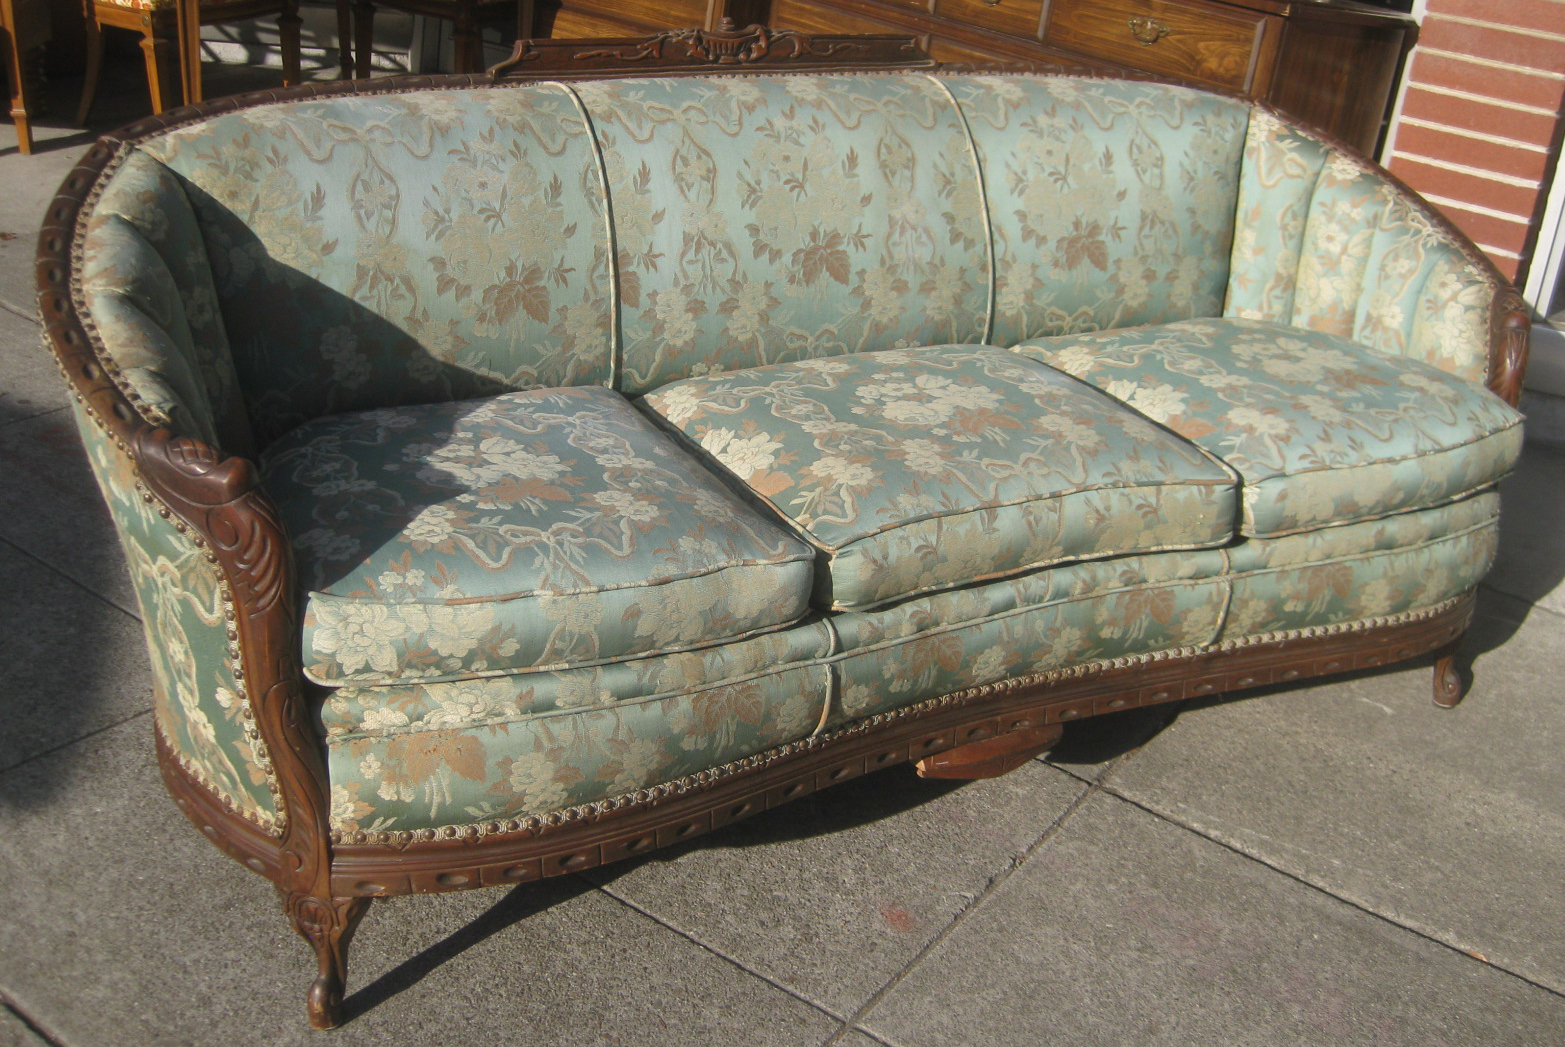 UHURU FURNITURE & COLLECTIBLES: SOLD - Antique Sofa - $125